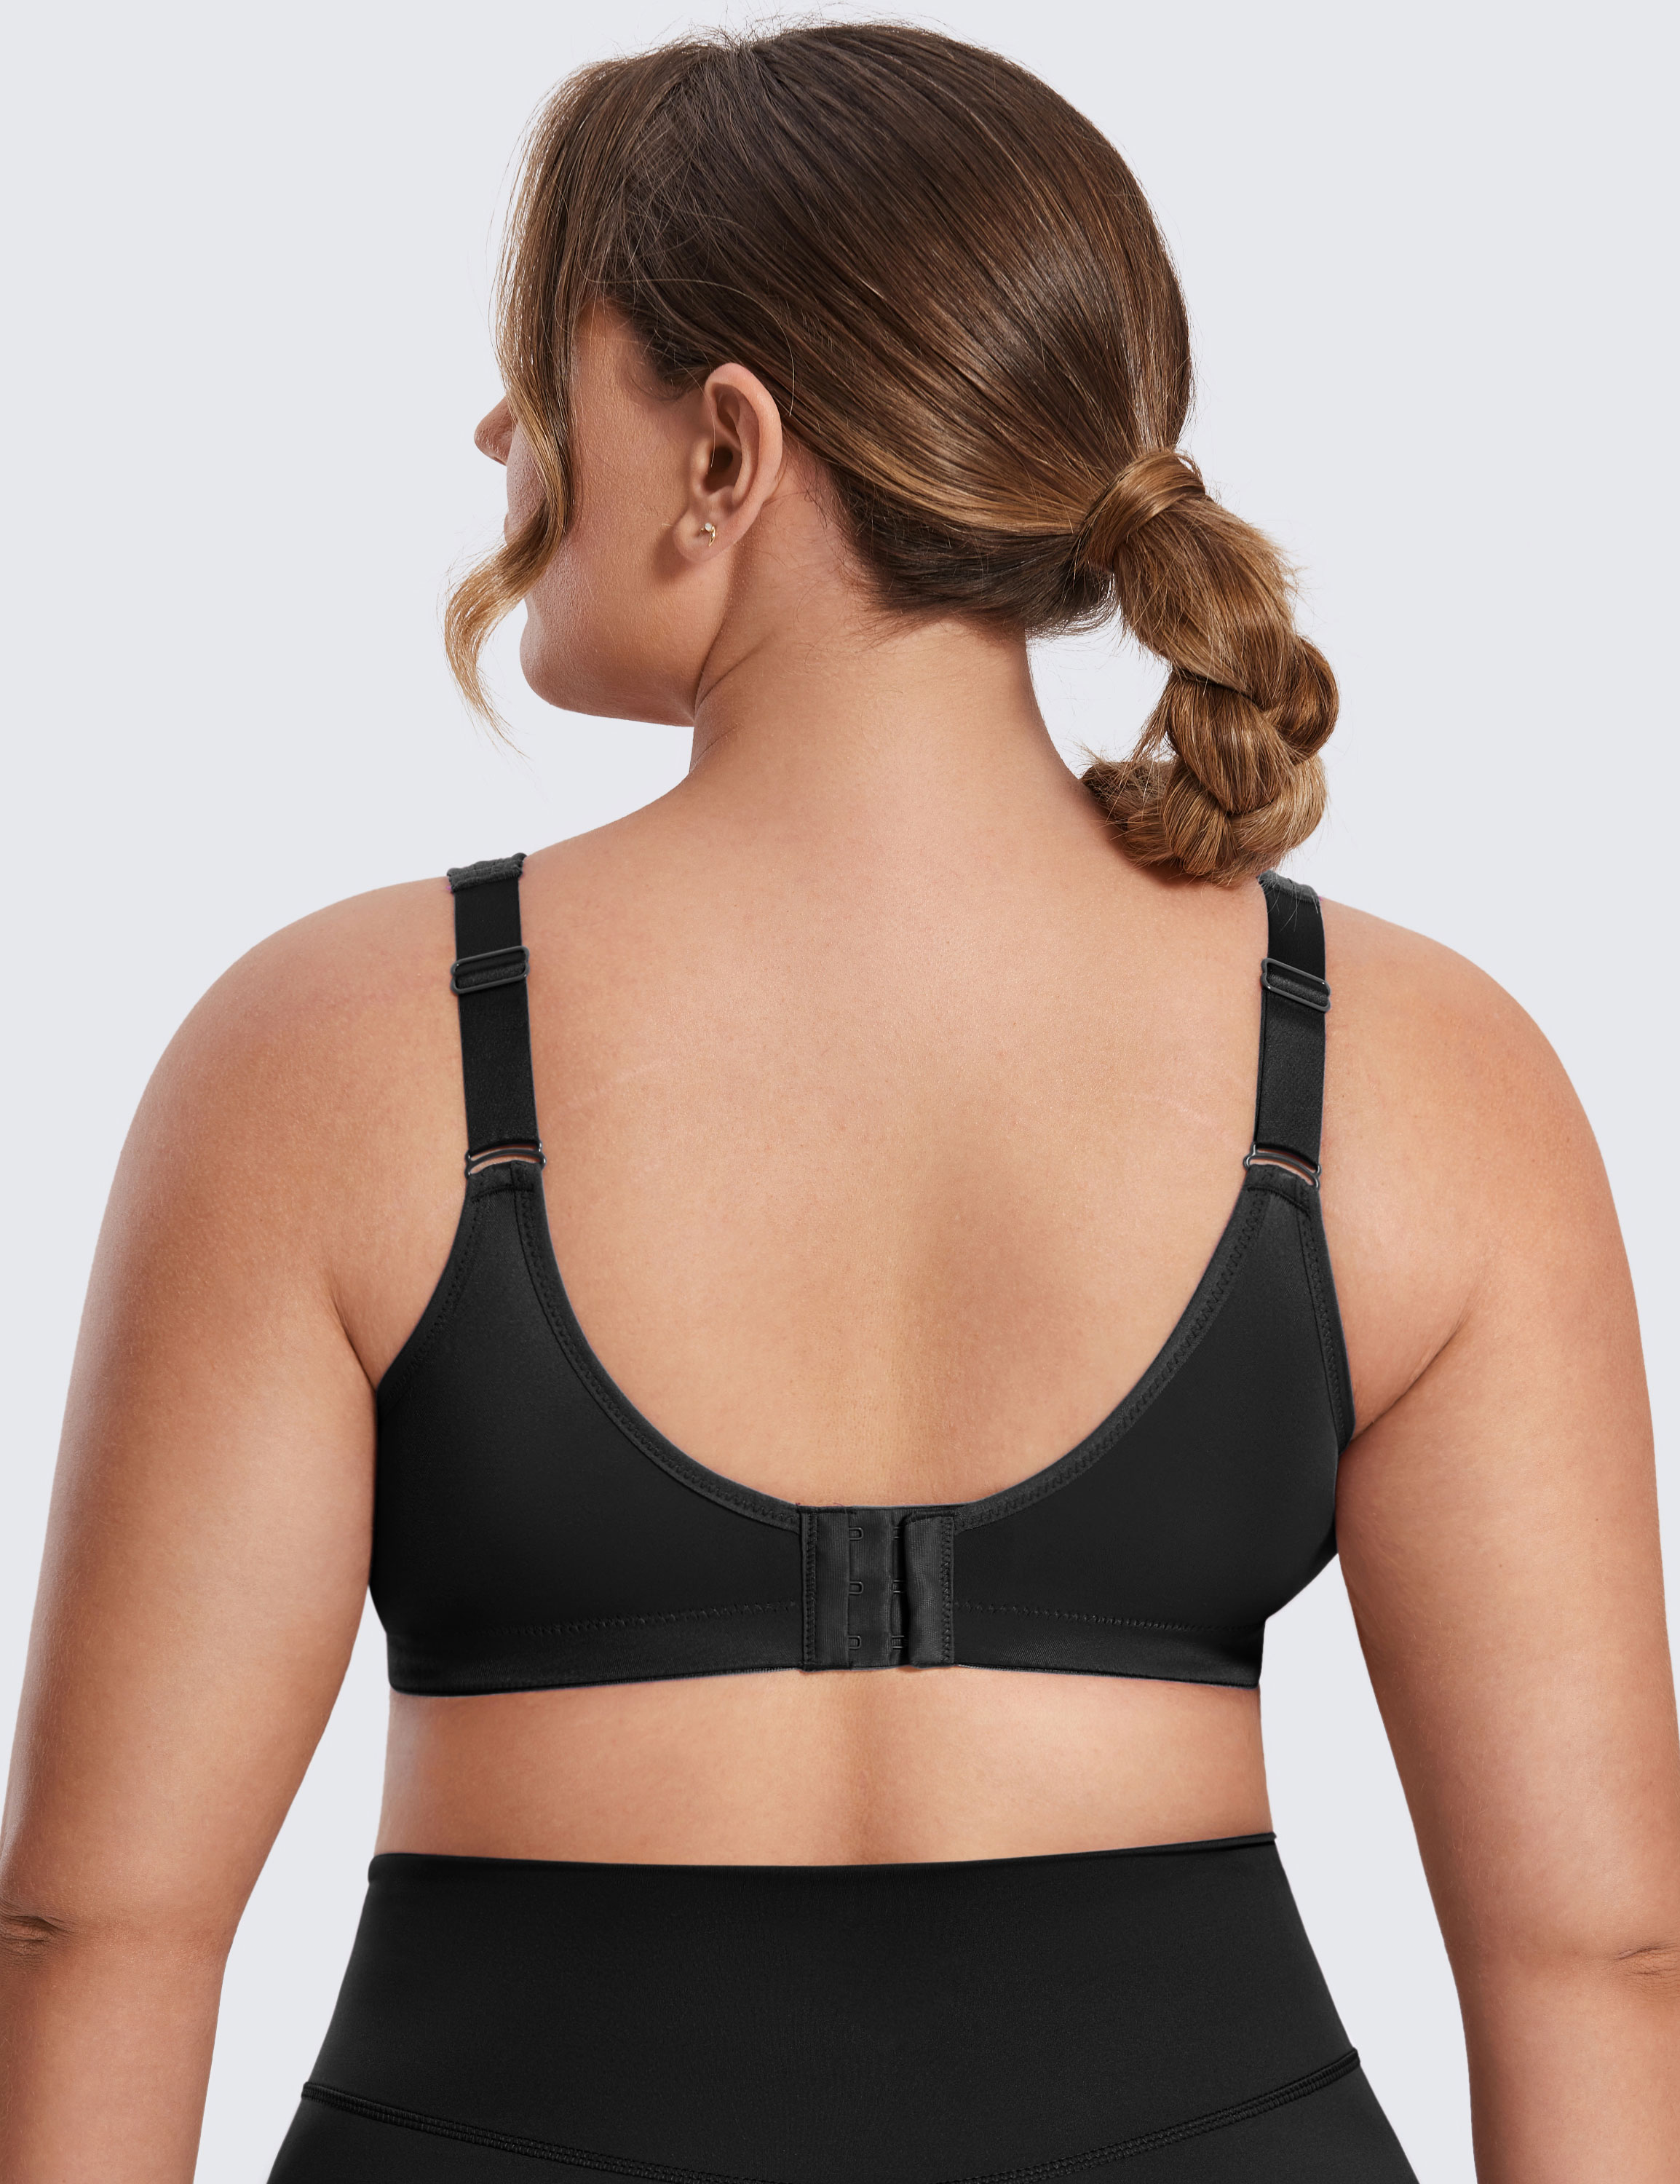 Women's Wire Free Sports Bra Plus Size High Impact No-Bounce Full Coverage  | eBay